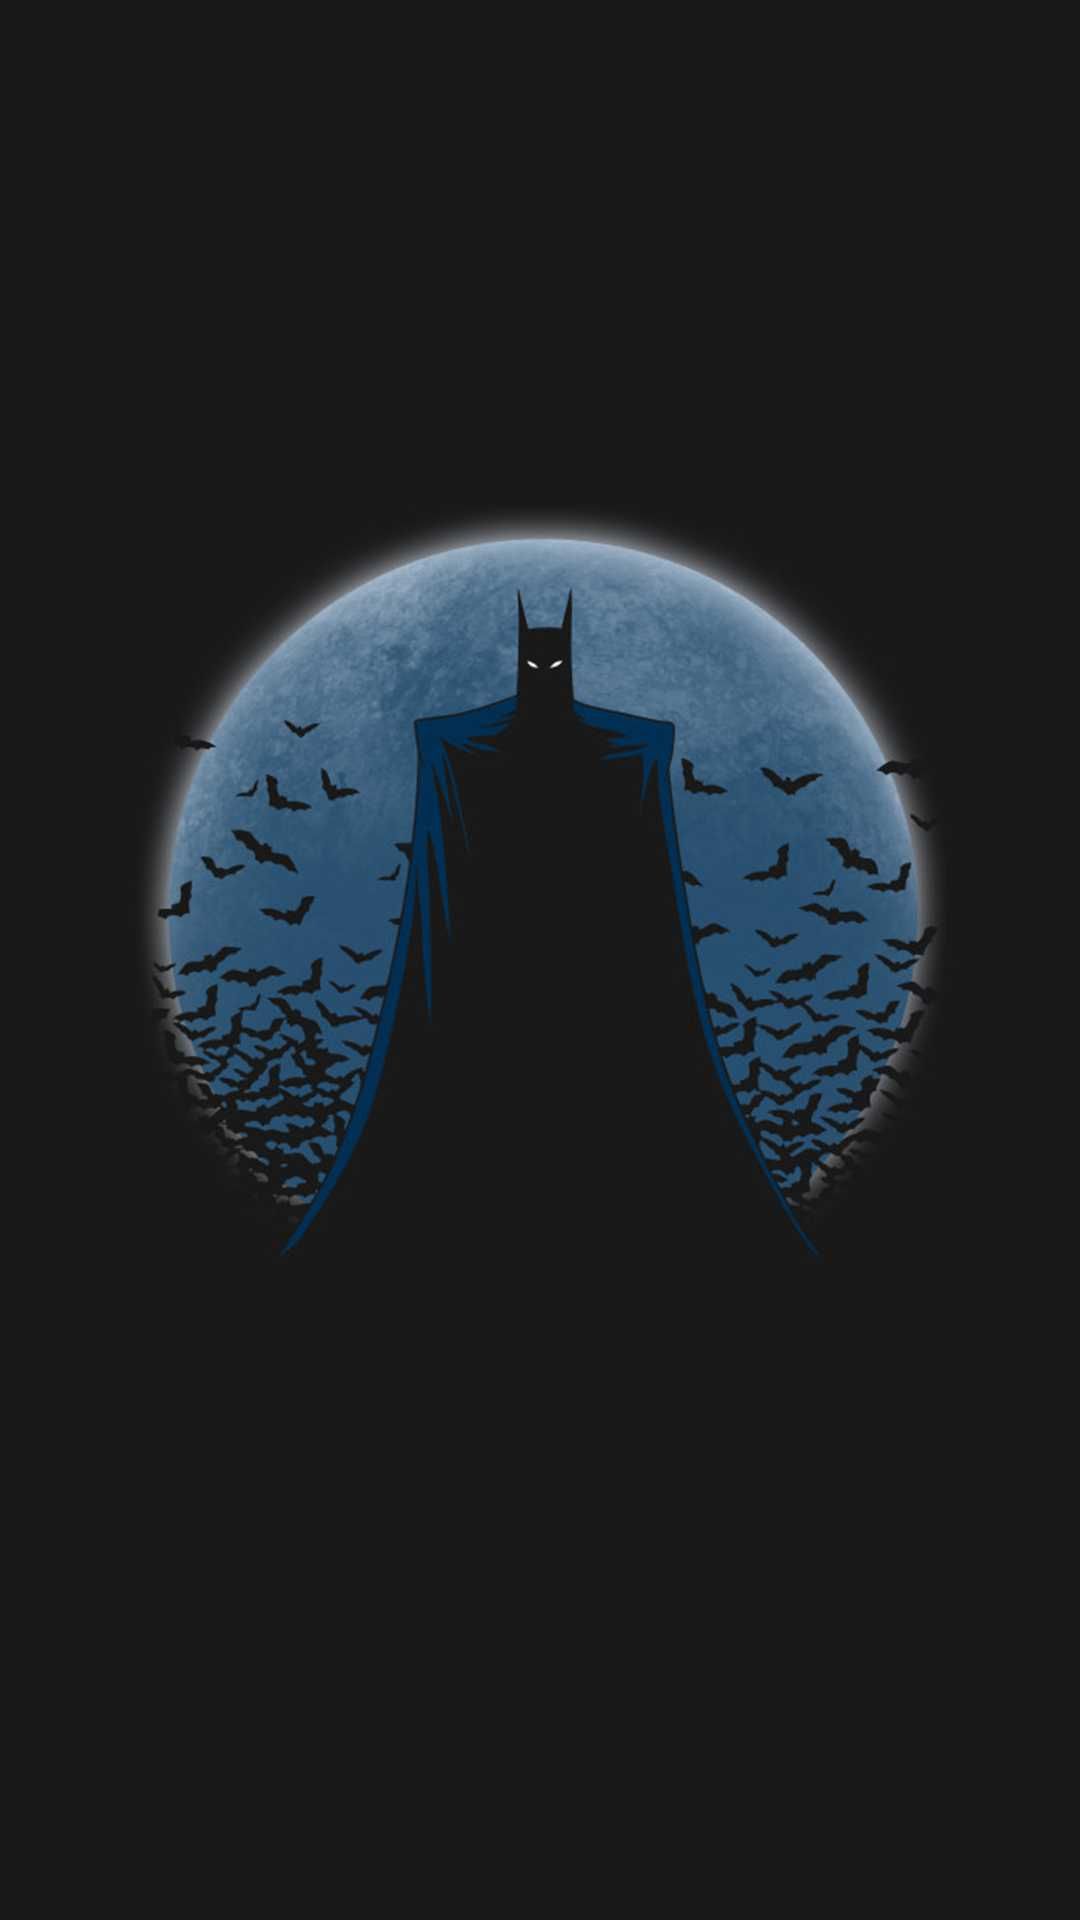 Batman Aesthetic Wallpaper Free